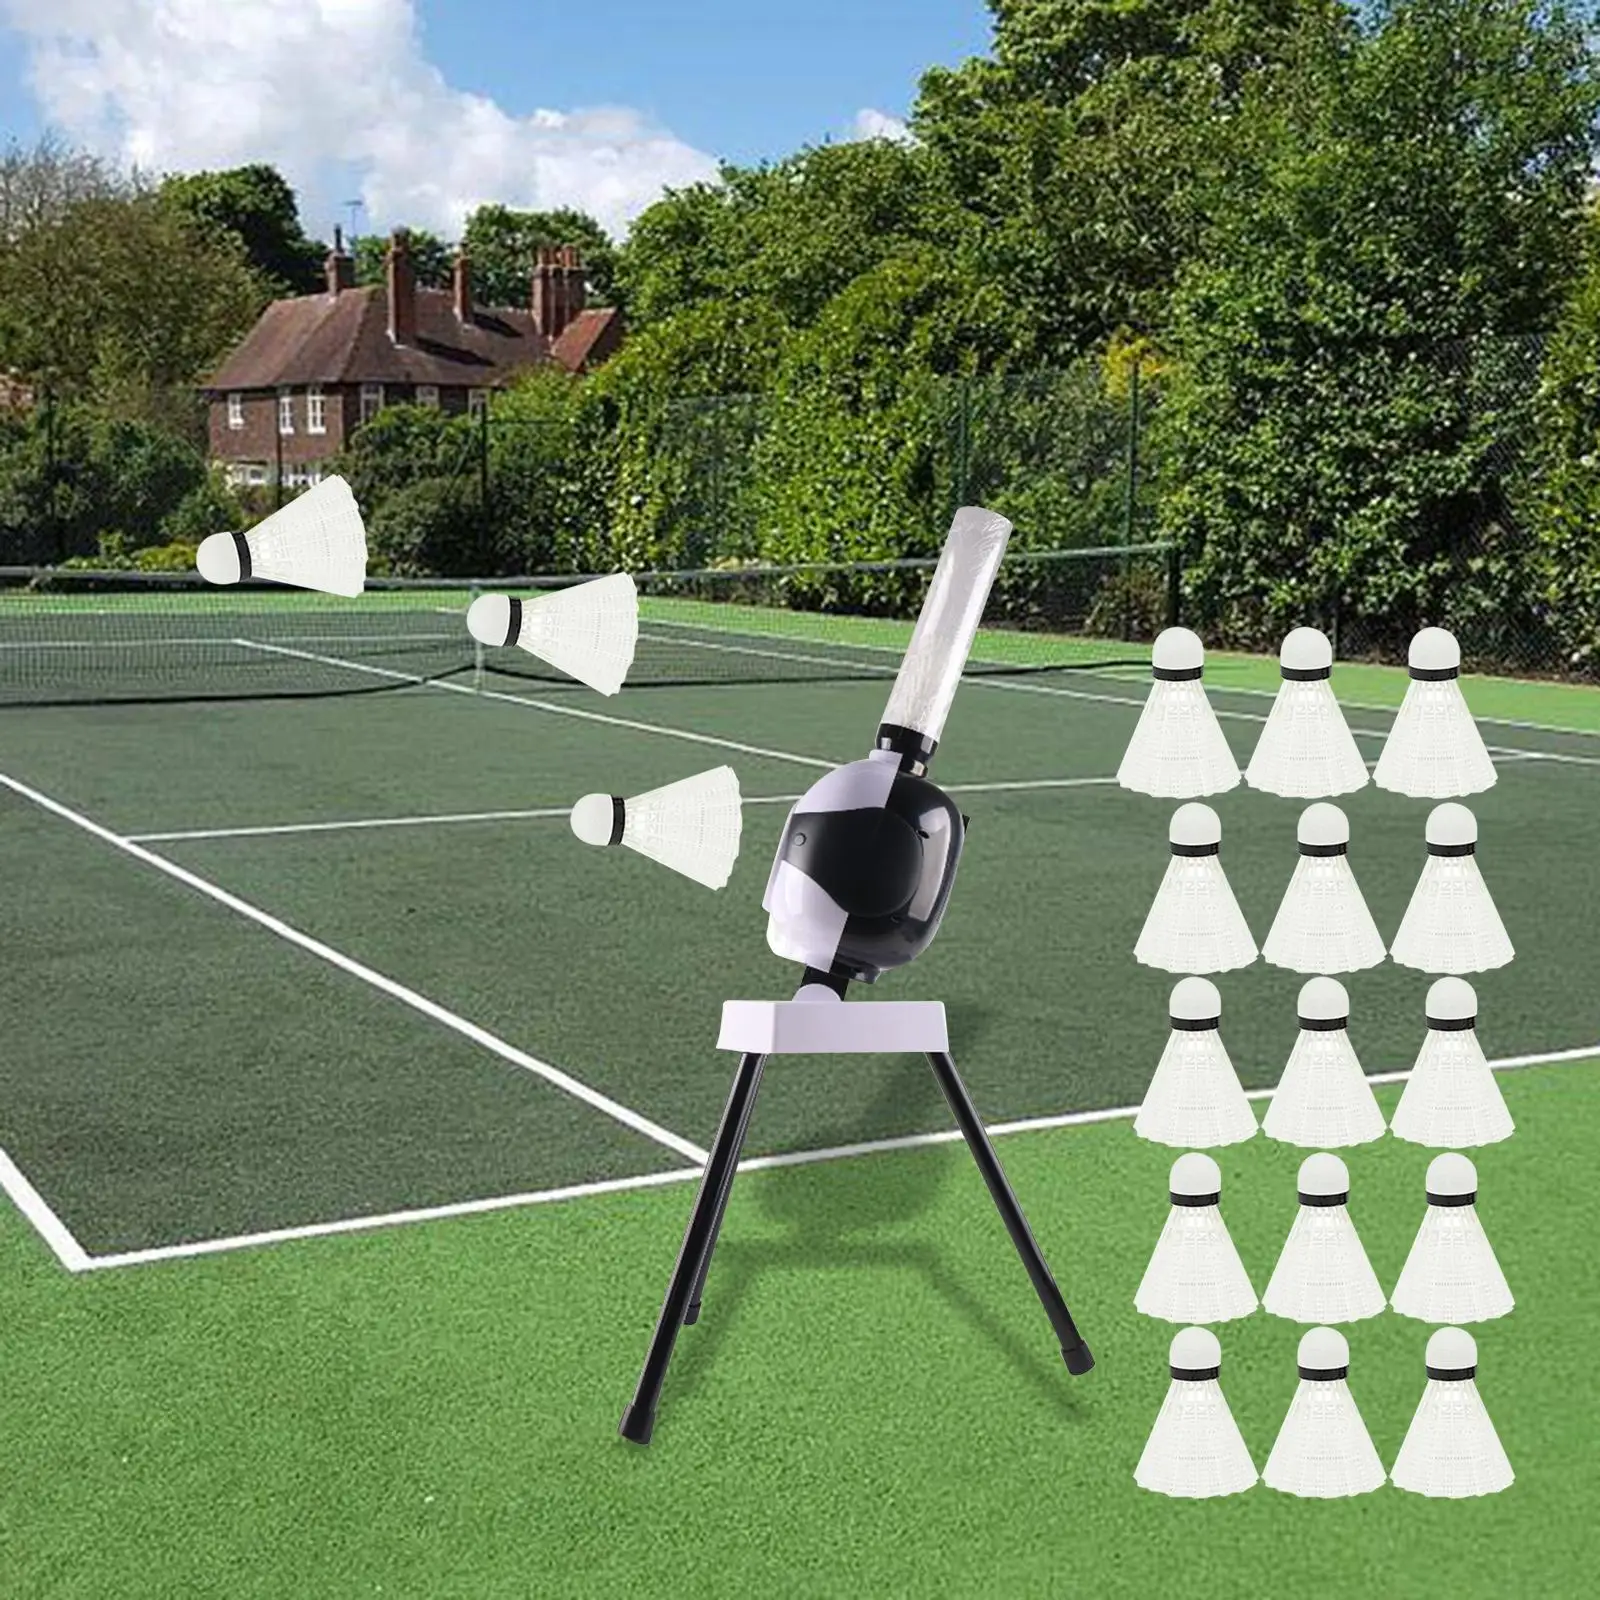 Badminton Serve Machine Electric Badminton Trainer for Adults Outdoor